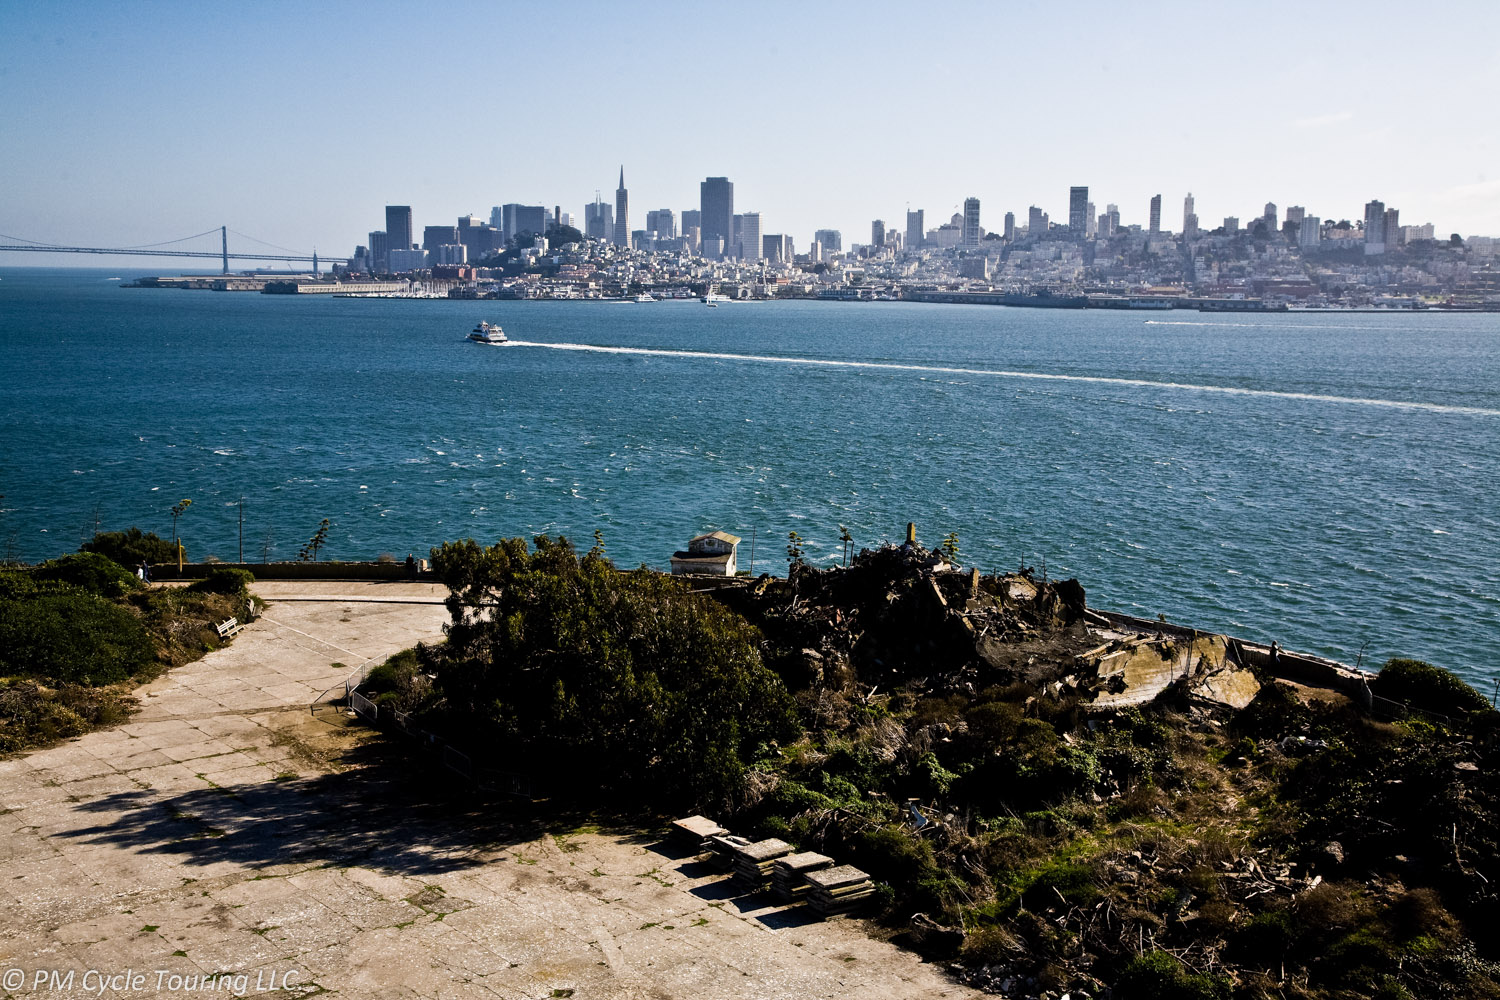 Downdown San Francisco skyline as seen from Alcatraz Island